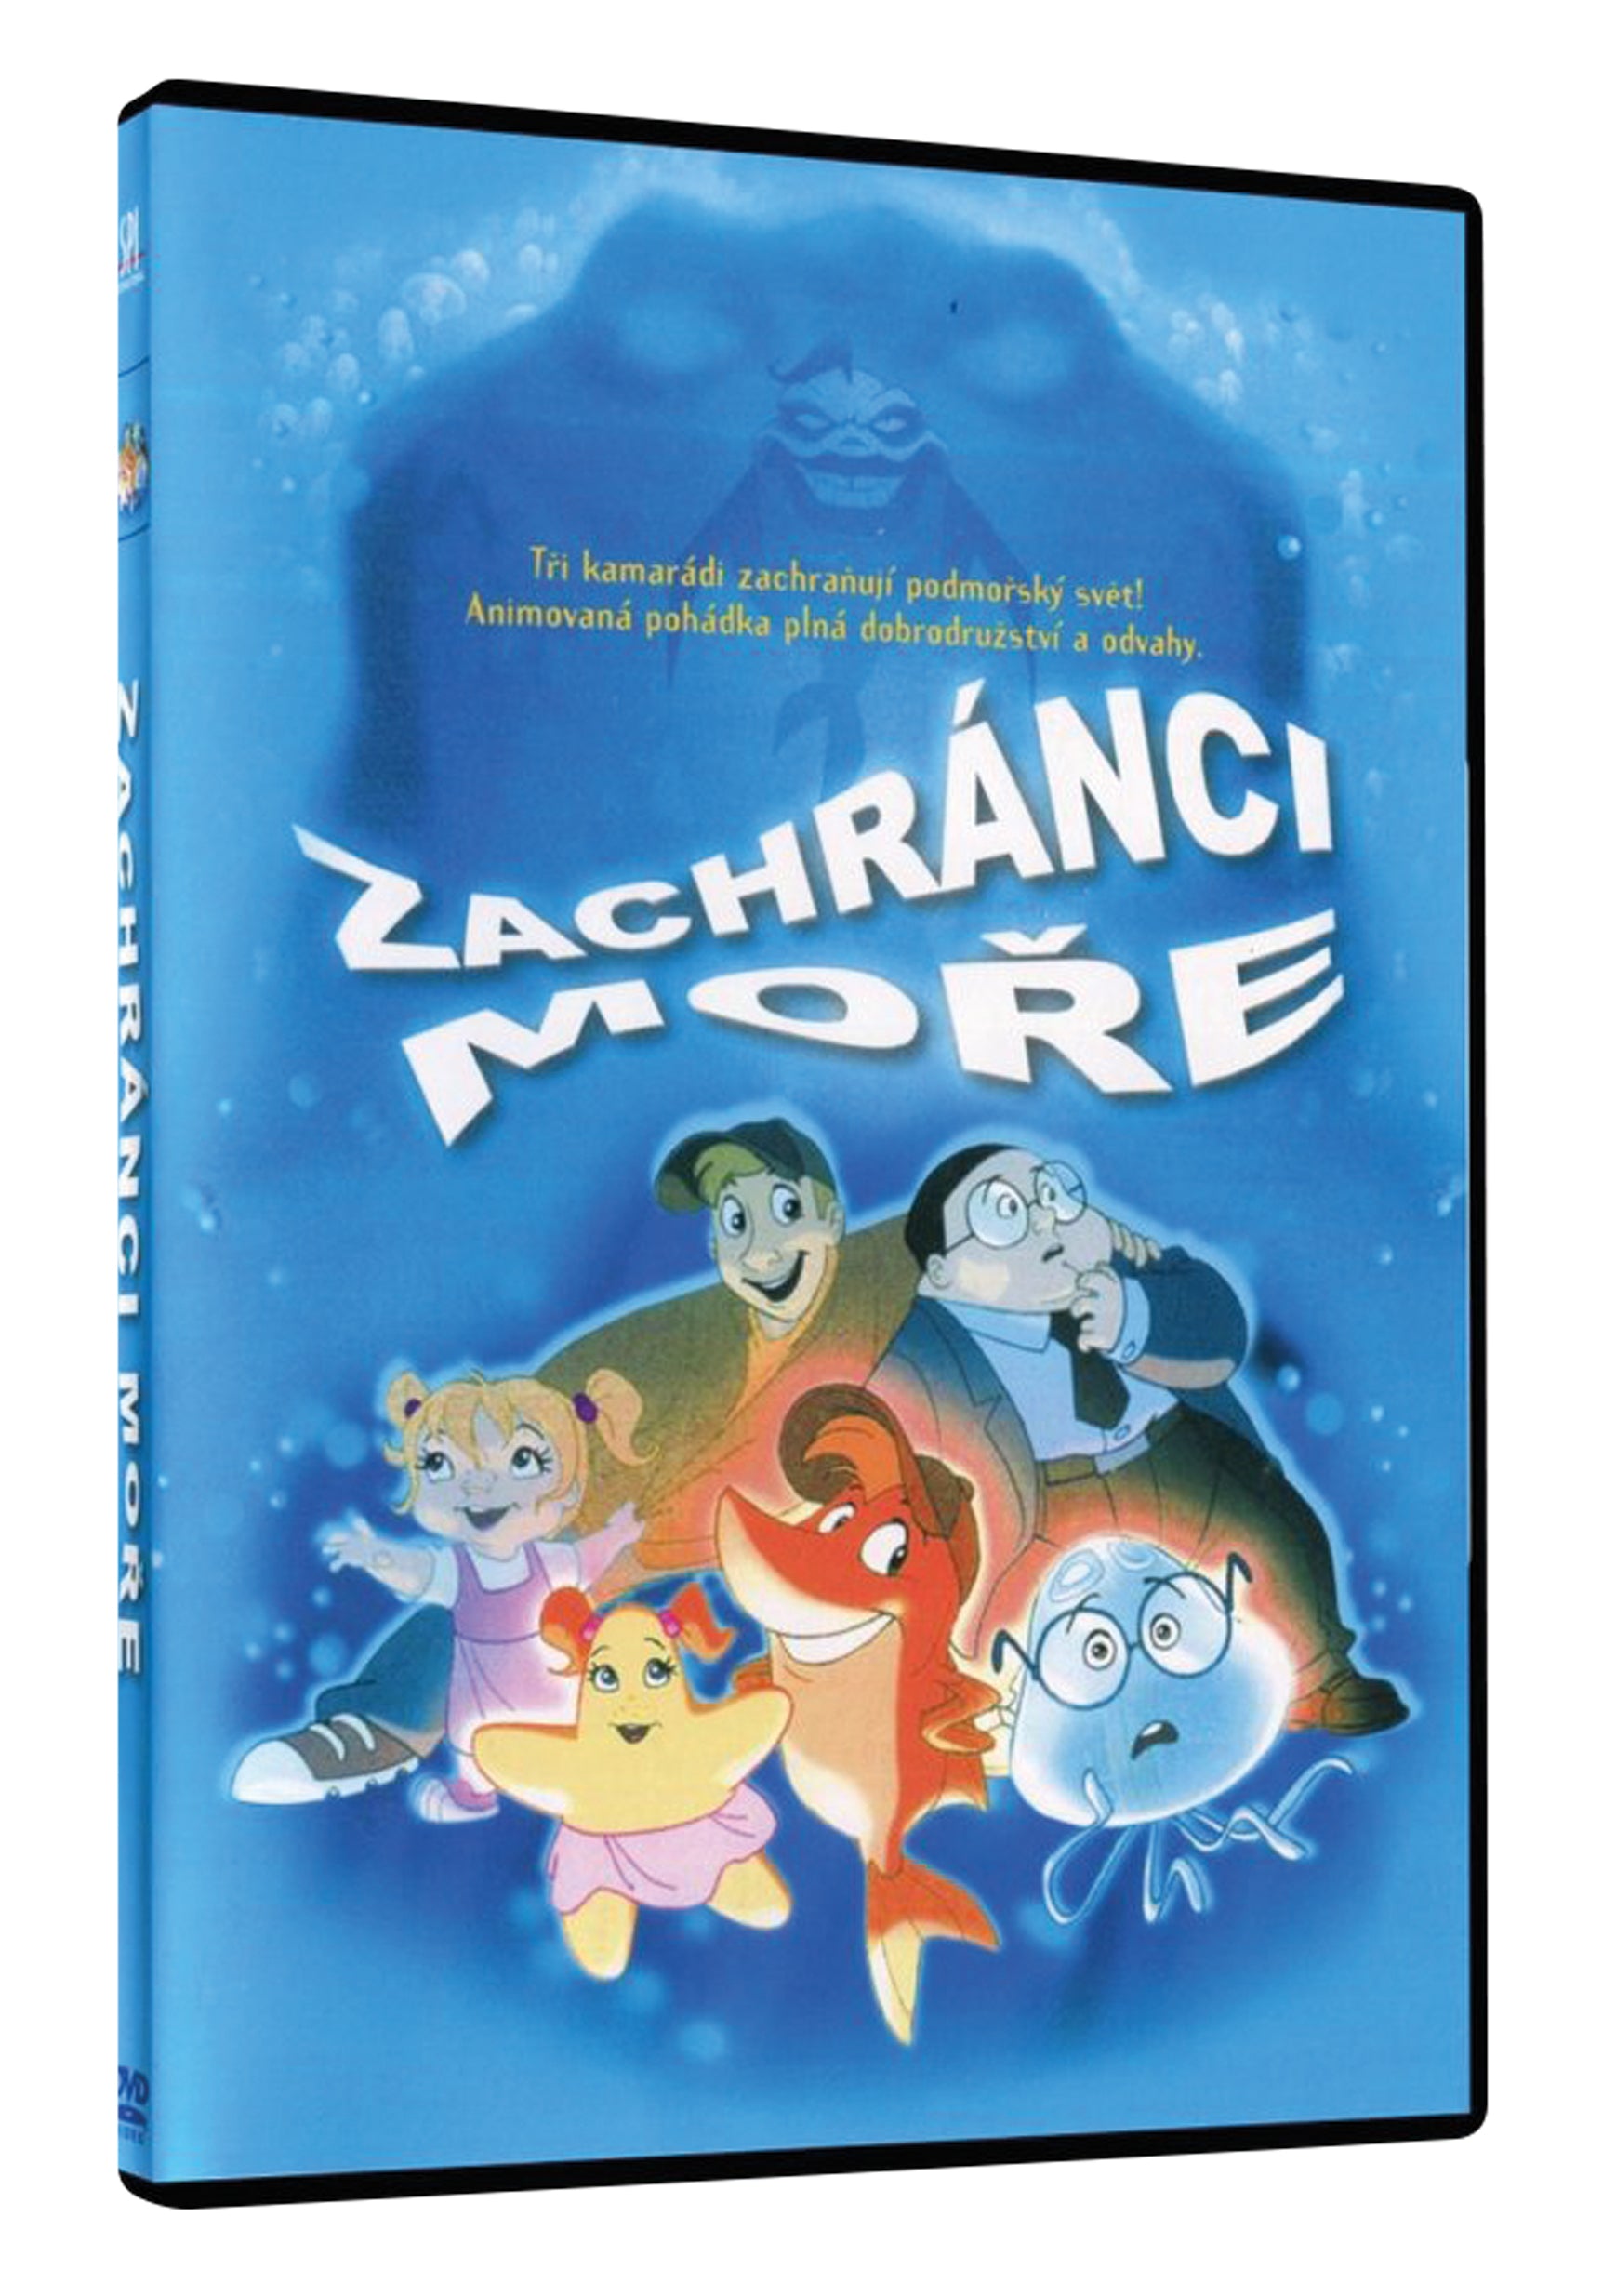 Zachranci more DVD / Help I am fish!